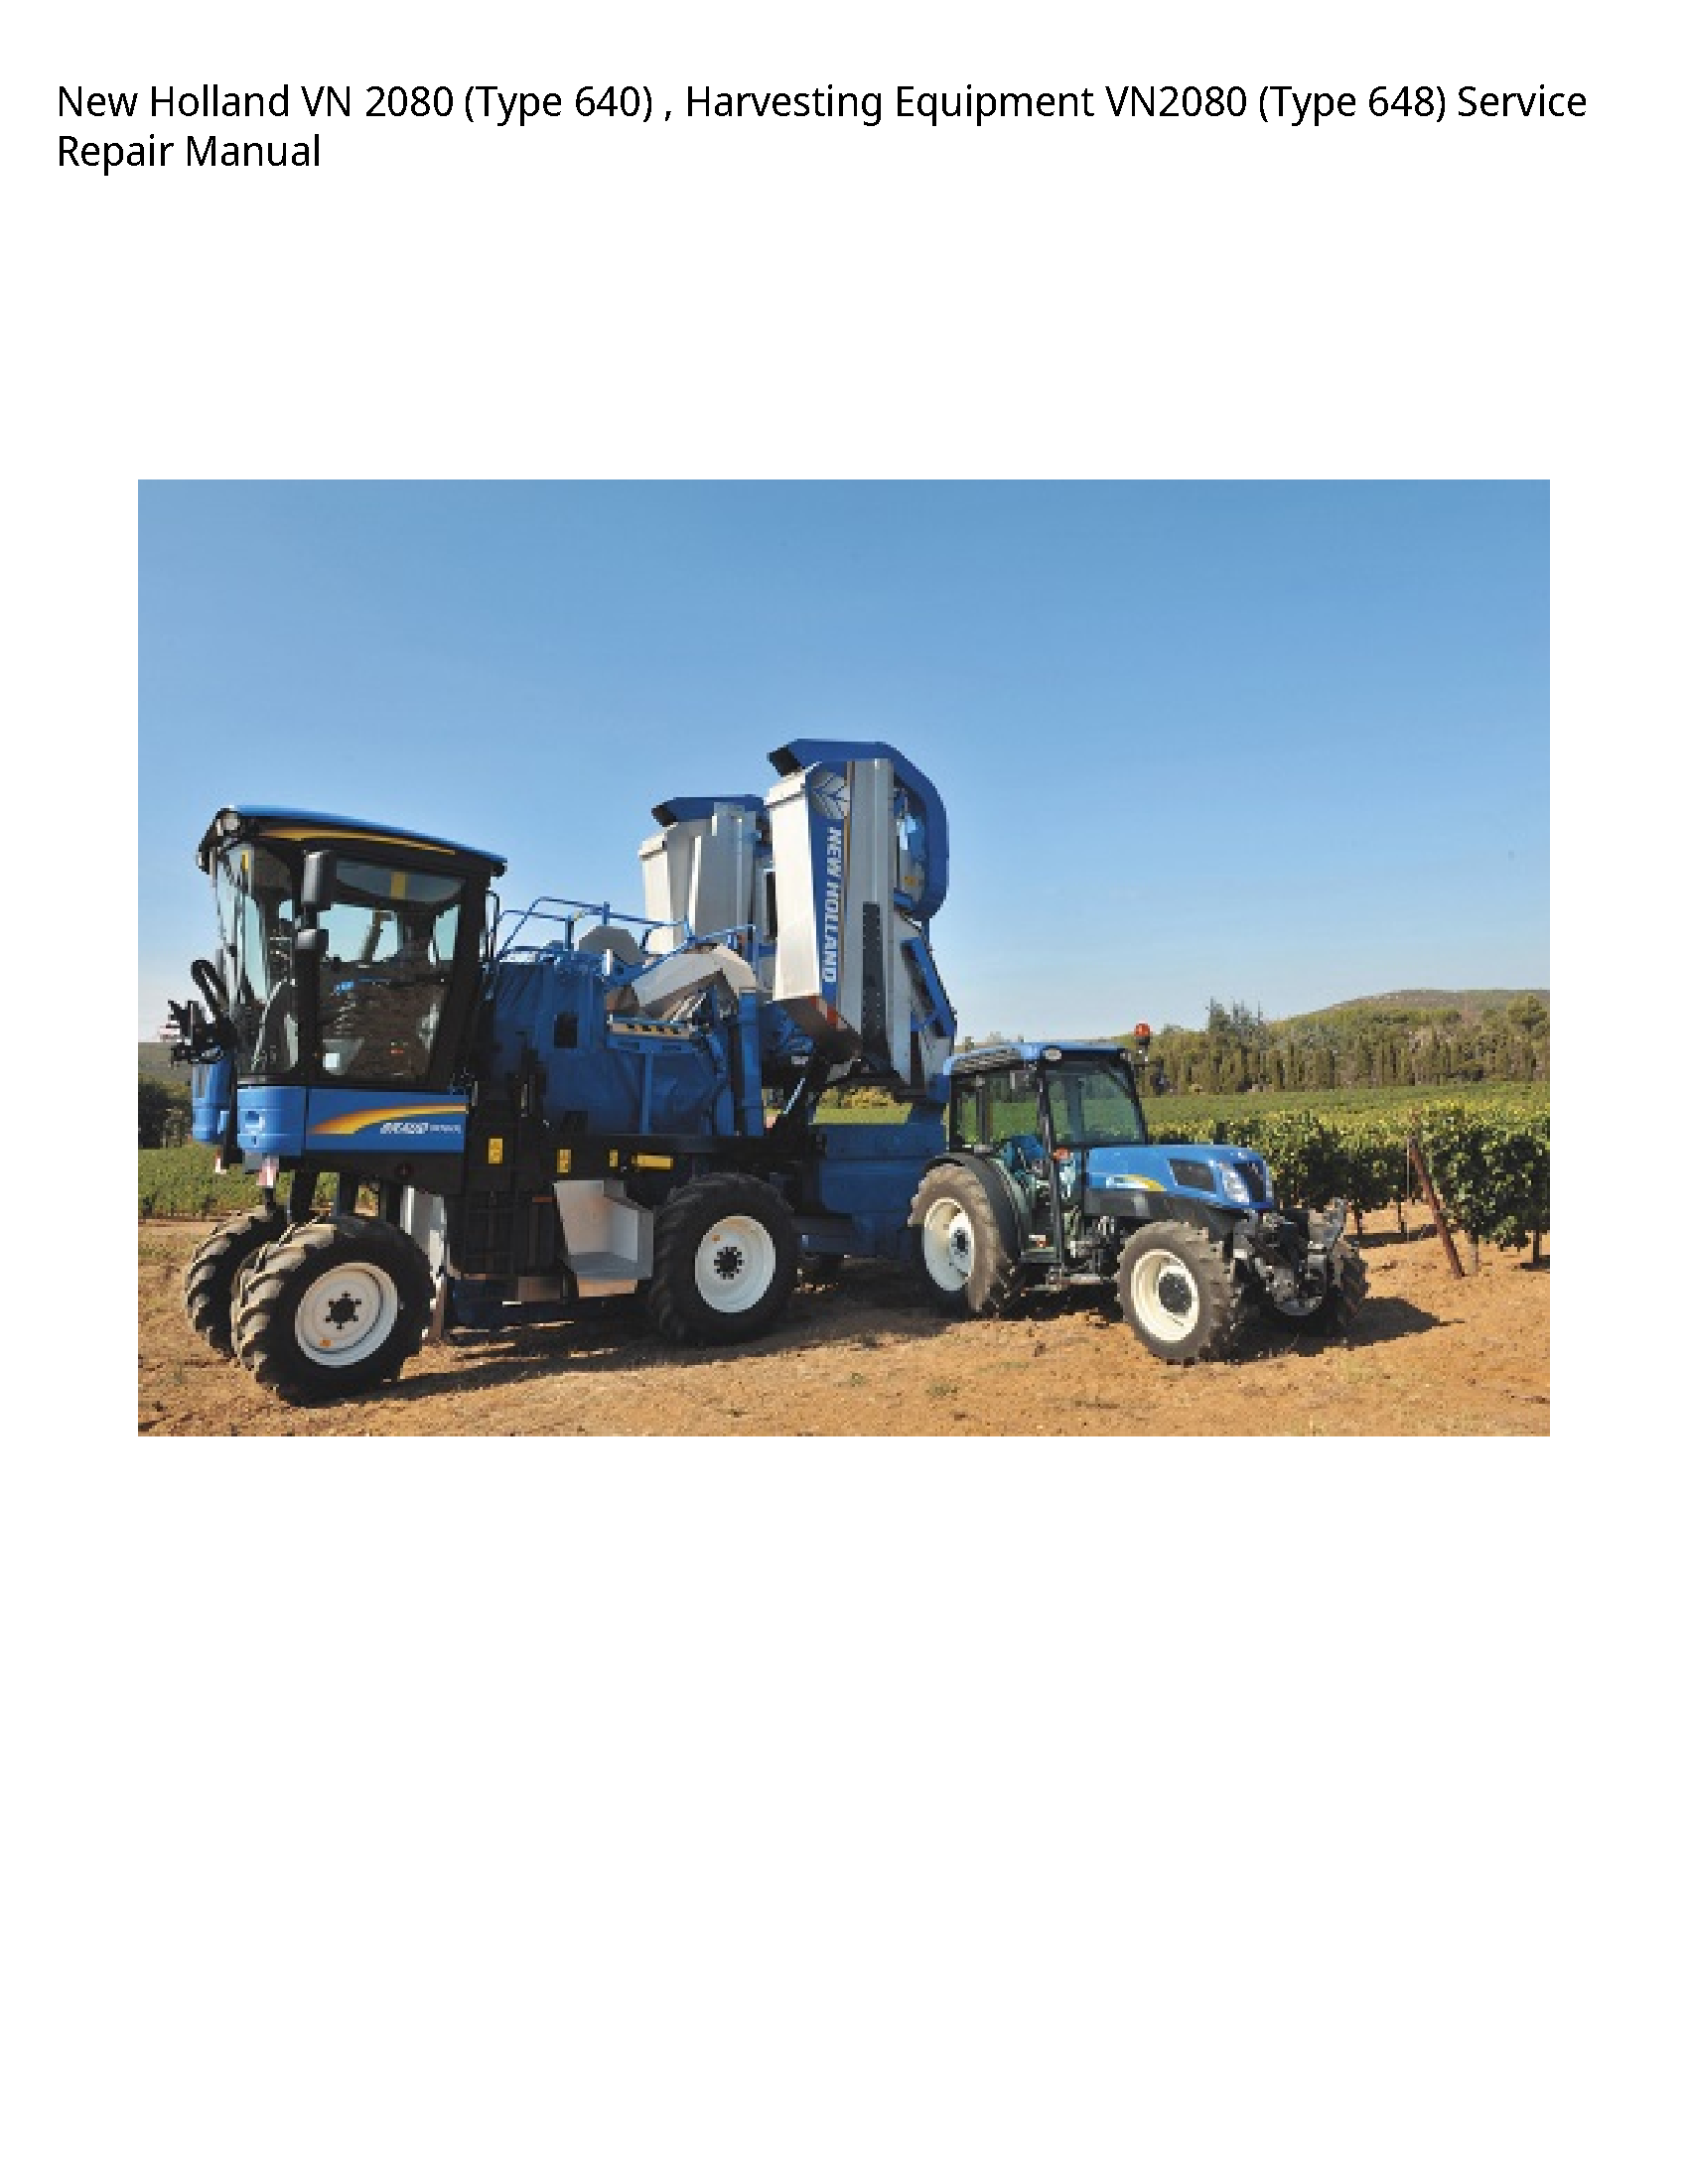 New Holland 2080 VN (Type Harvesting Equipment (Type manual